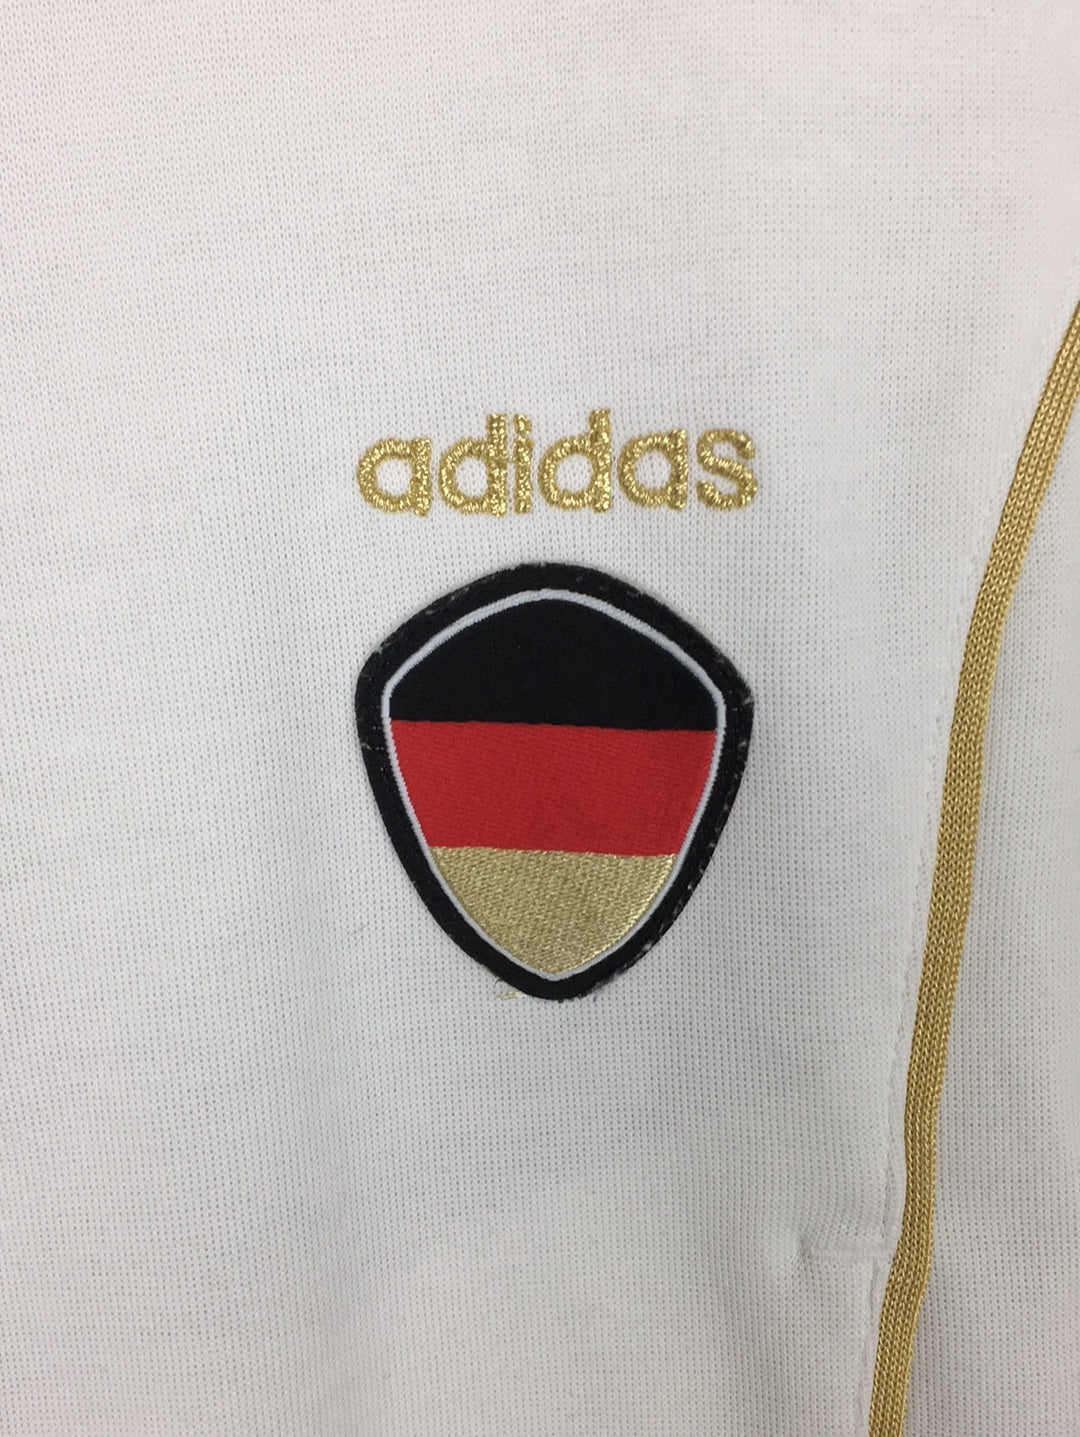 Adidas Deutschland Trainingsjacke (XS)